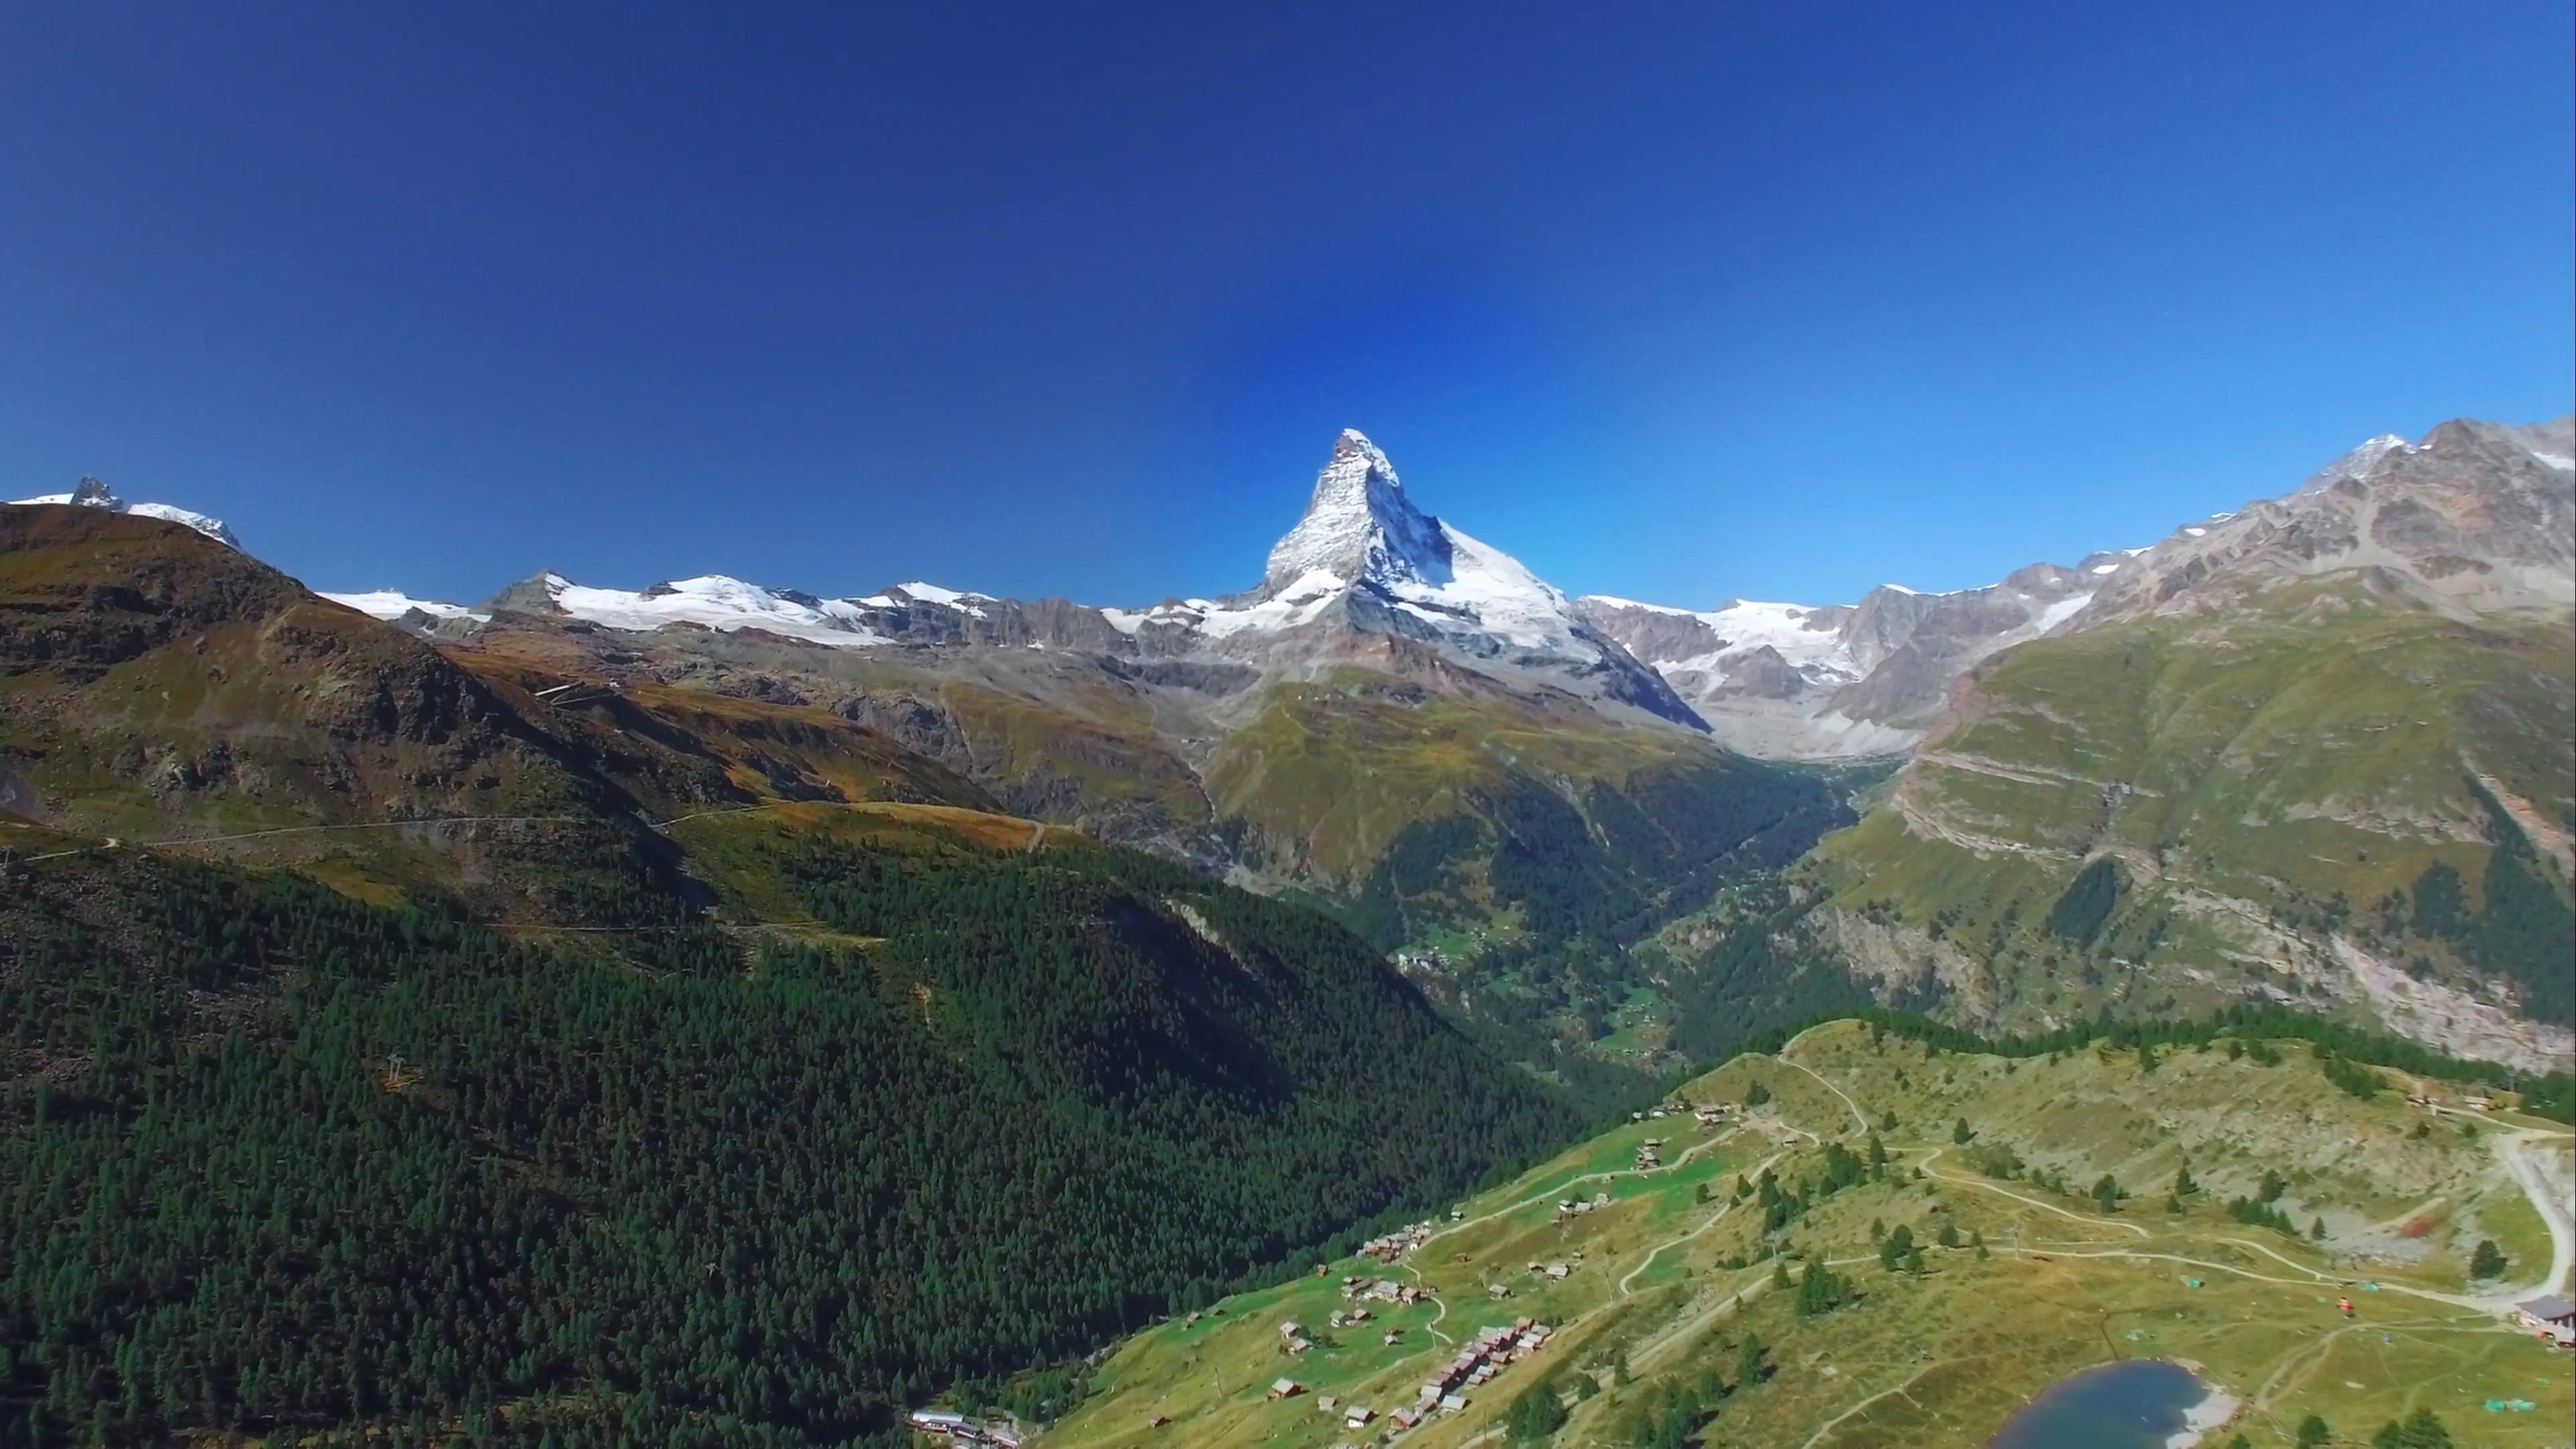 Matterhorn Mountain's Most Famous Landmark And Symbol